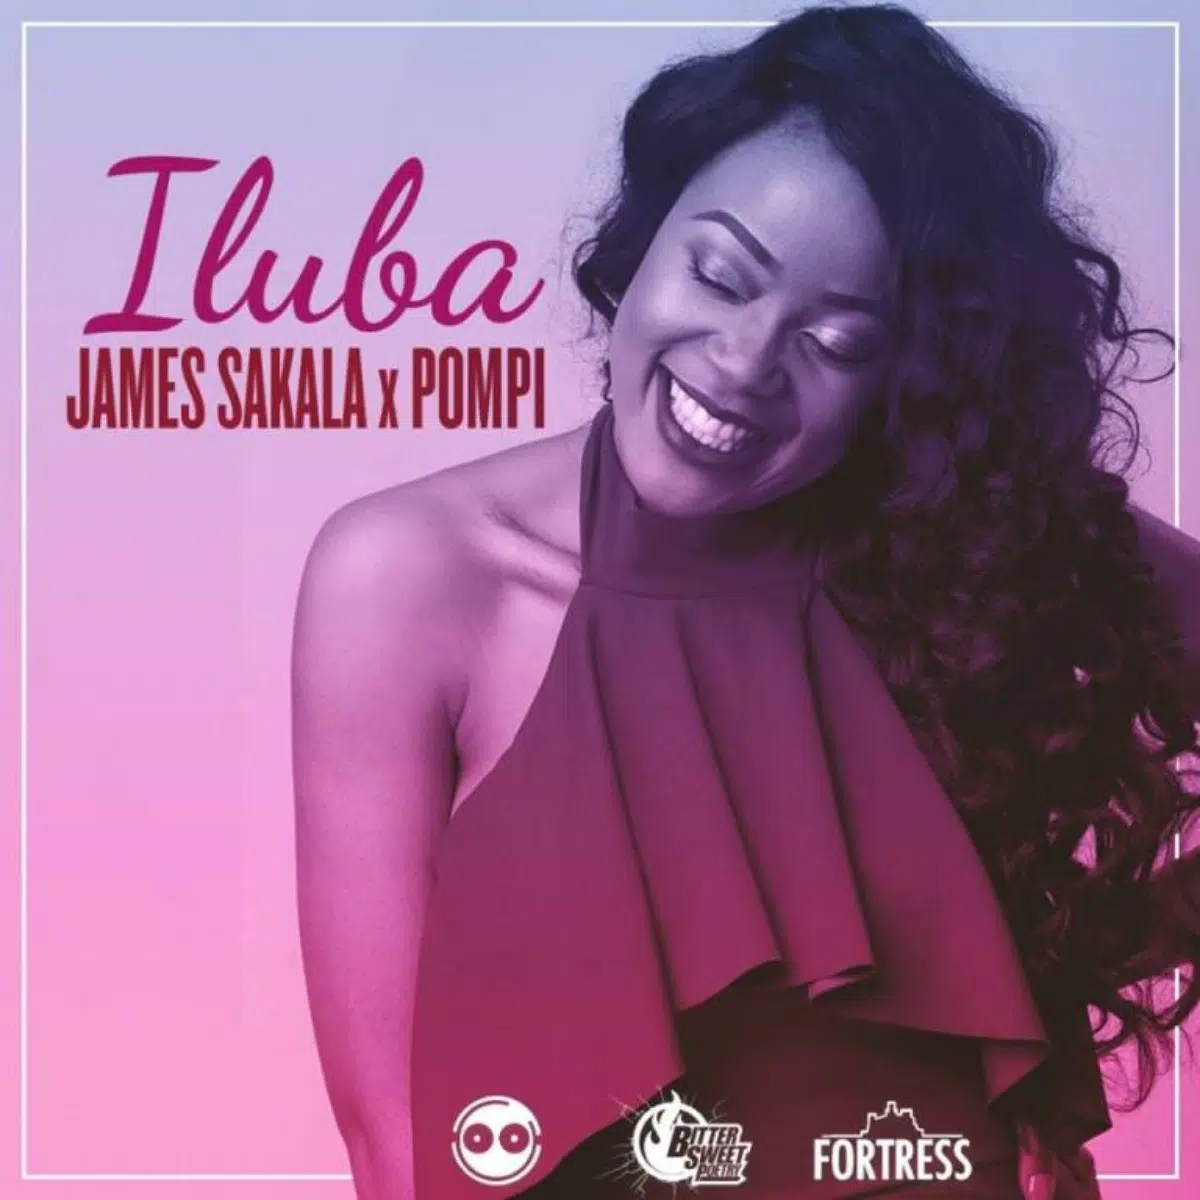 DOWNLOAD: James Sakala x Pompi – “Iluba” Mp3